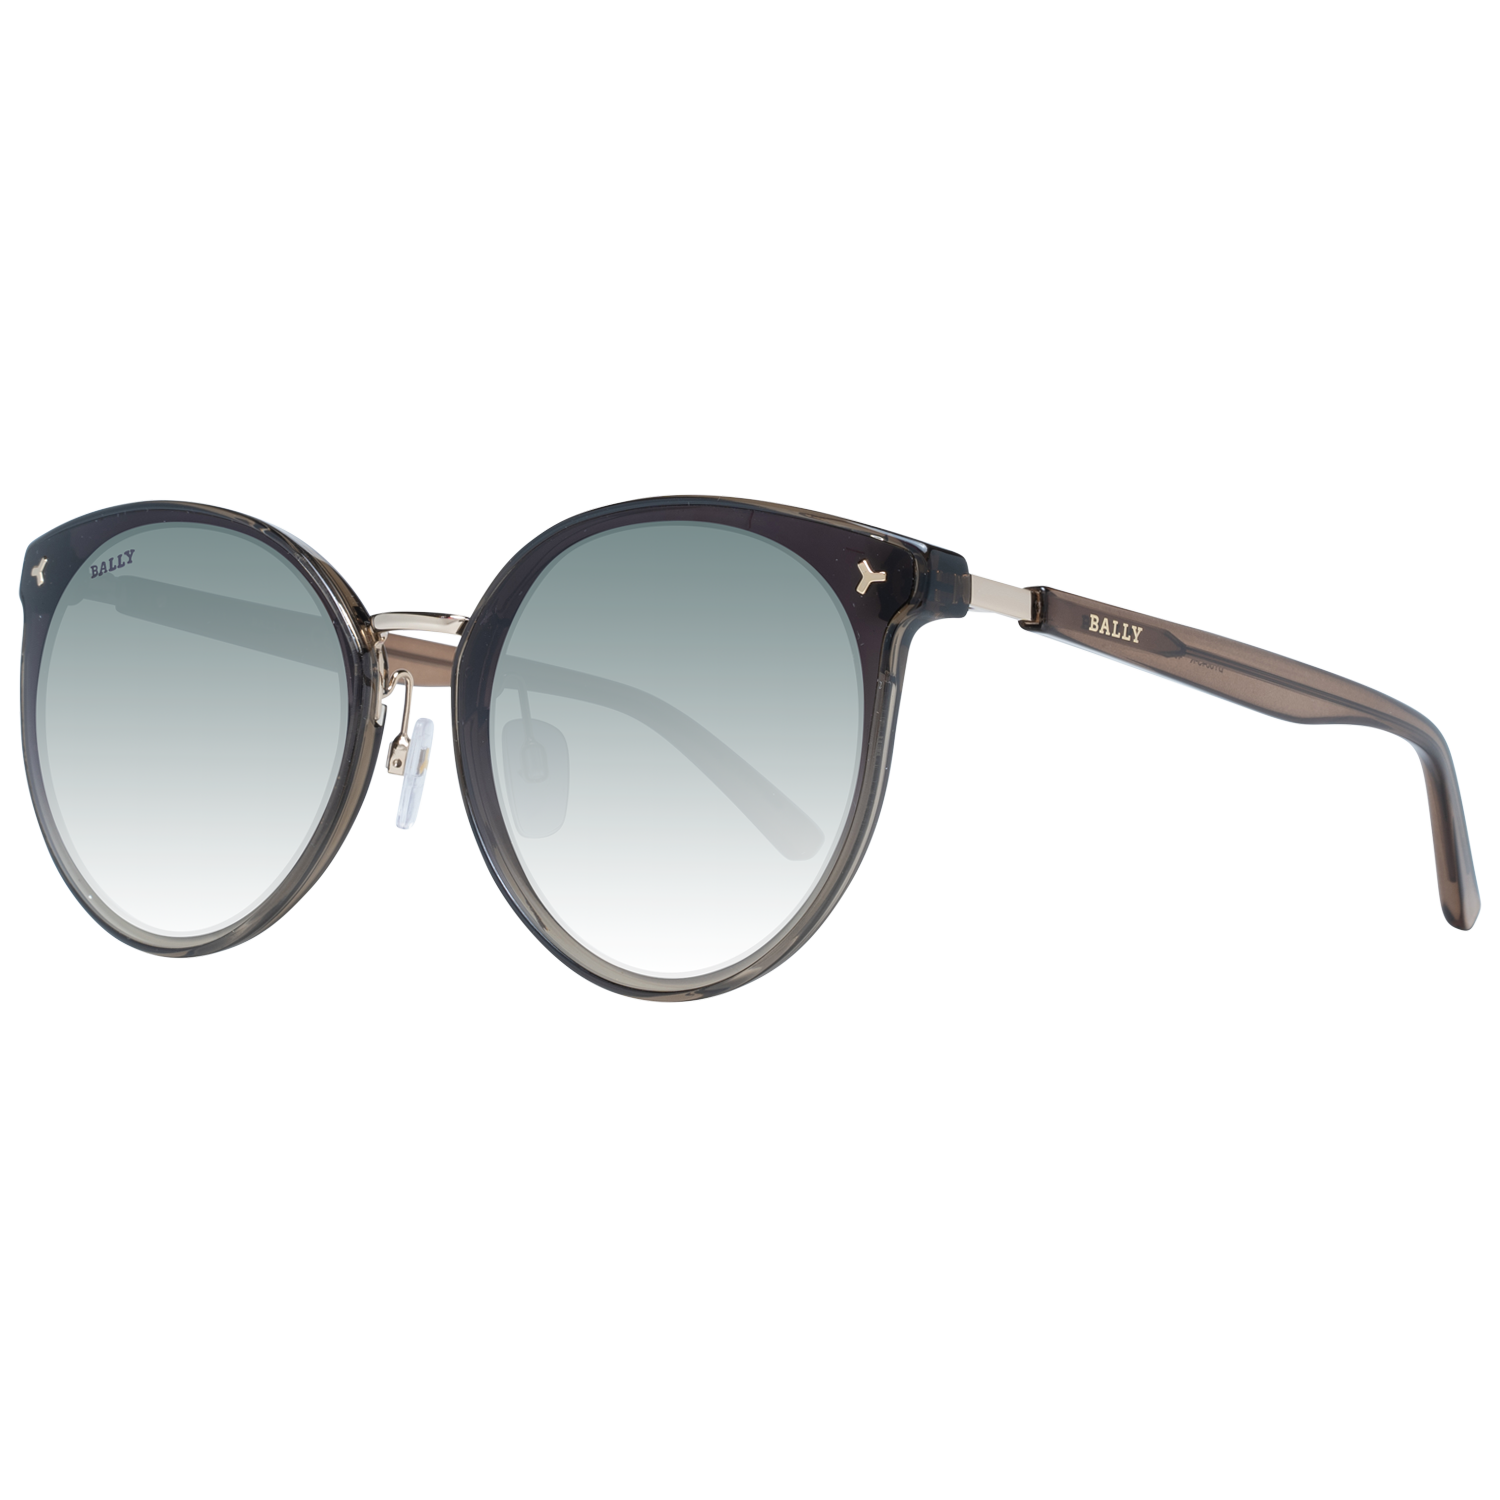 Bally Sunglasses Bally Sunglasses BY0043-K 45B 65 Eyeglasses Eyewear UK USA Australia 